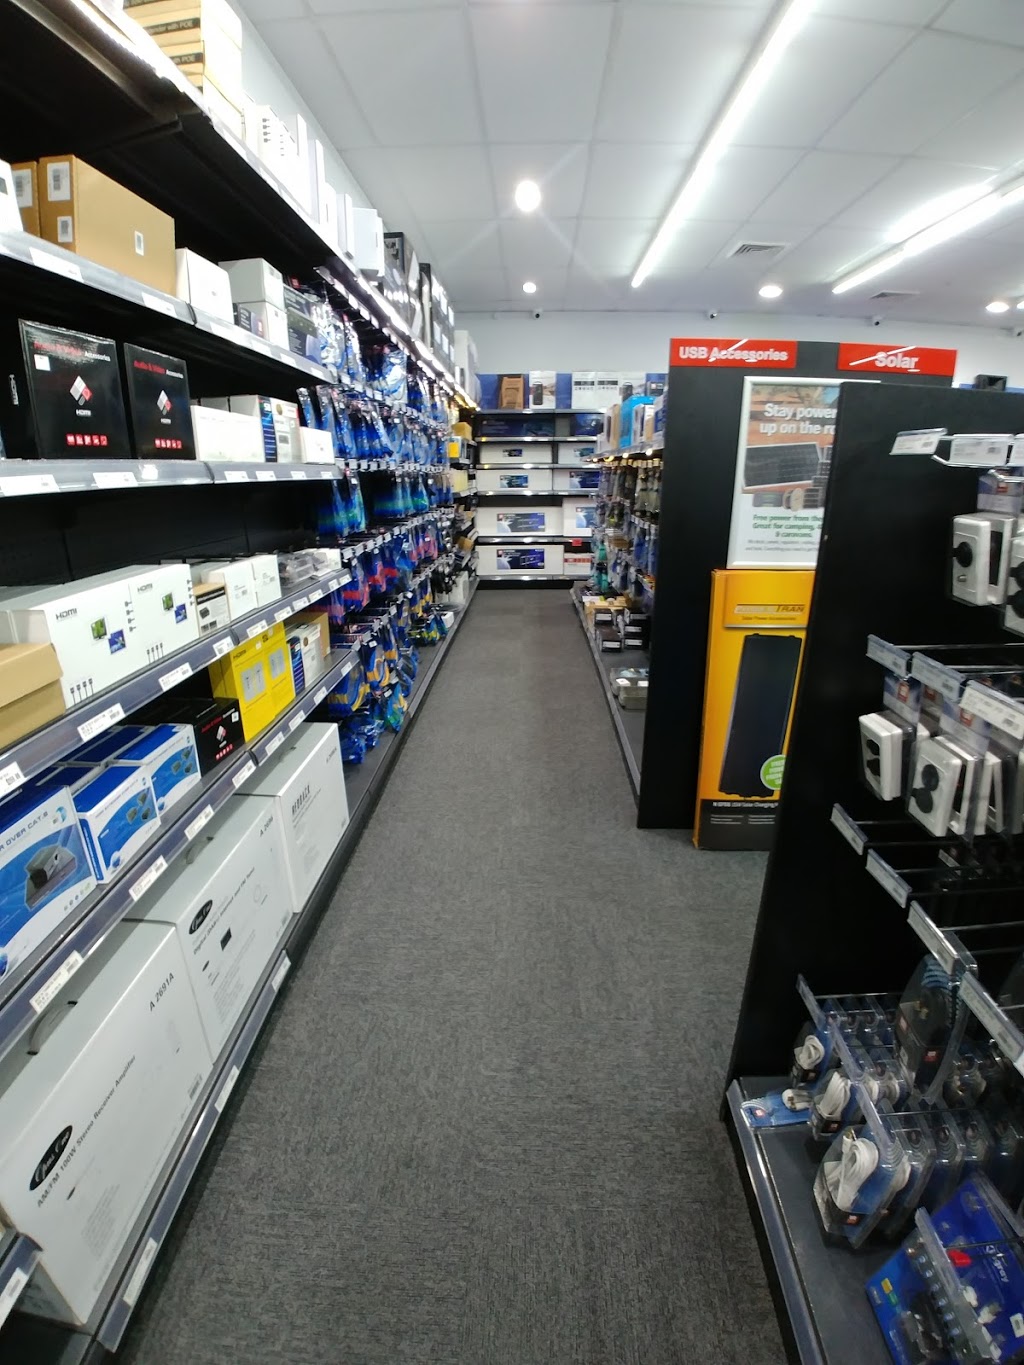 Altronics | electronics store | 5/1326 Albany Hwy, Cannington WA 6107, Australia | 0894282168 OR +61 8 9428 2168